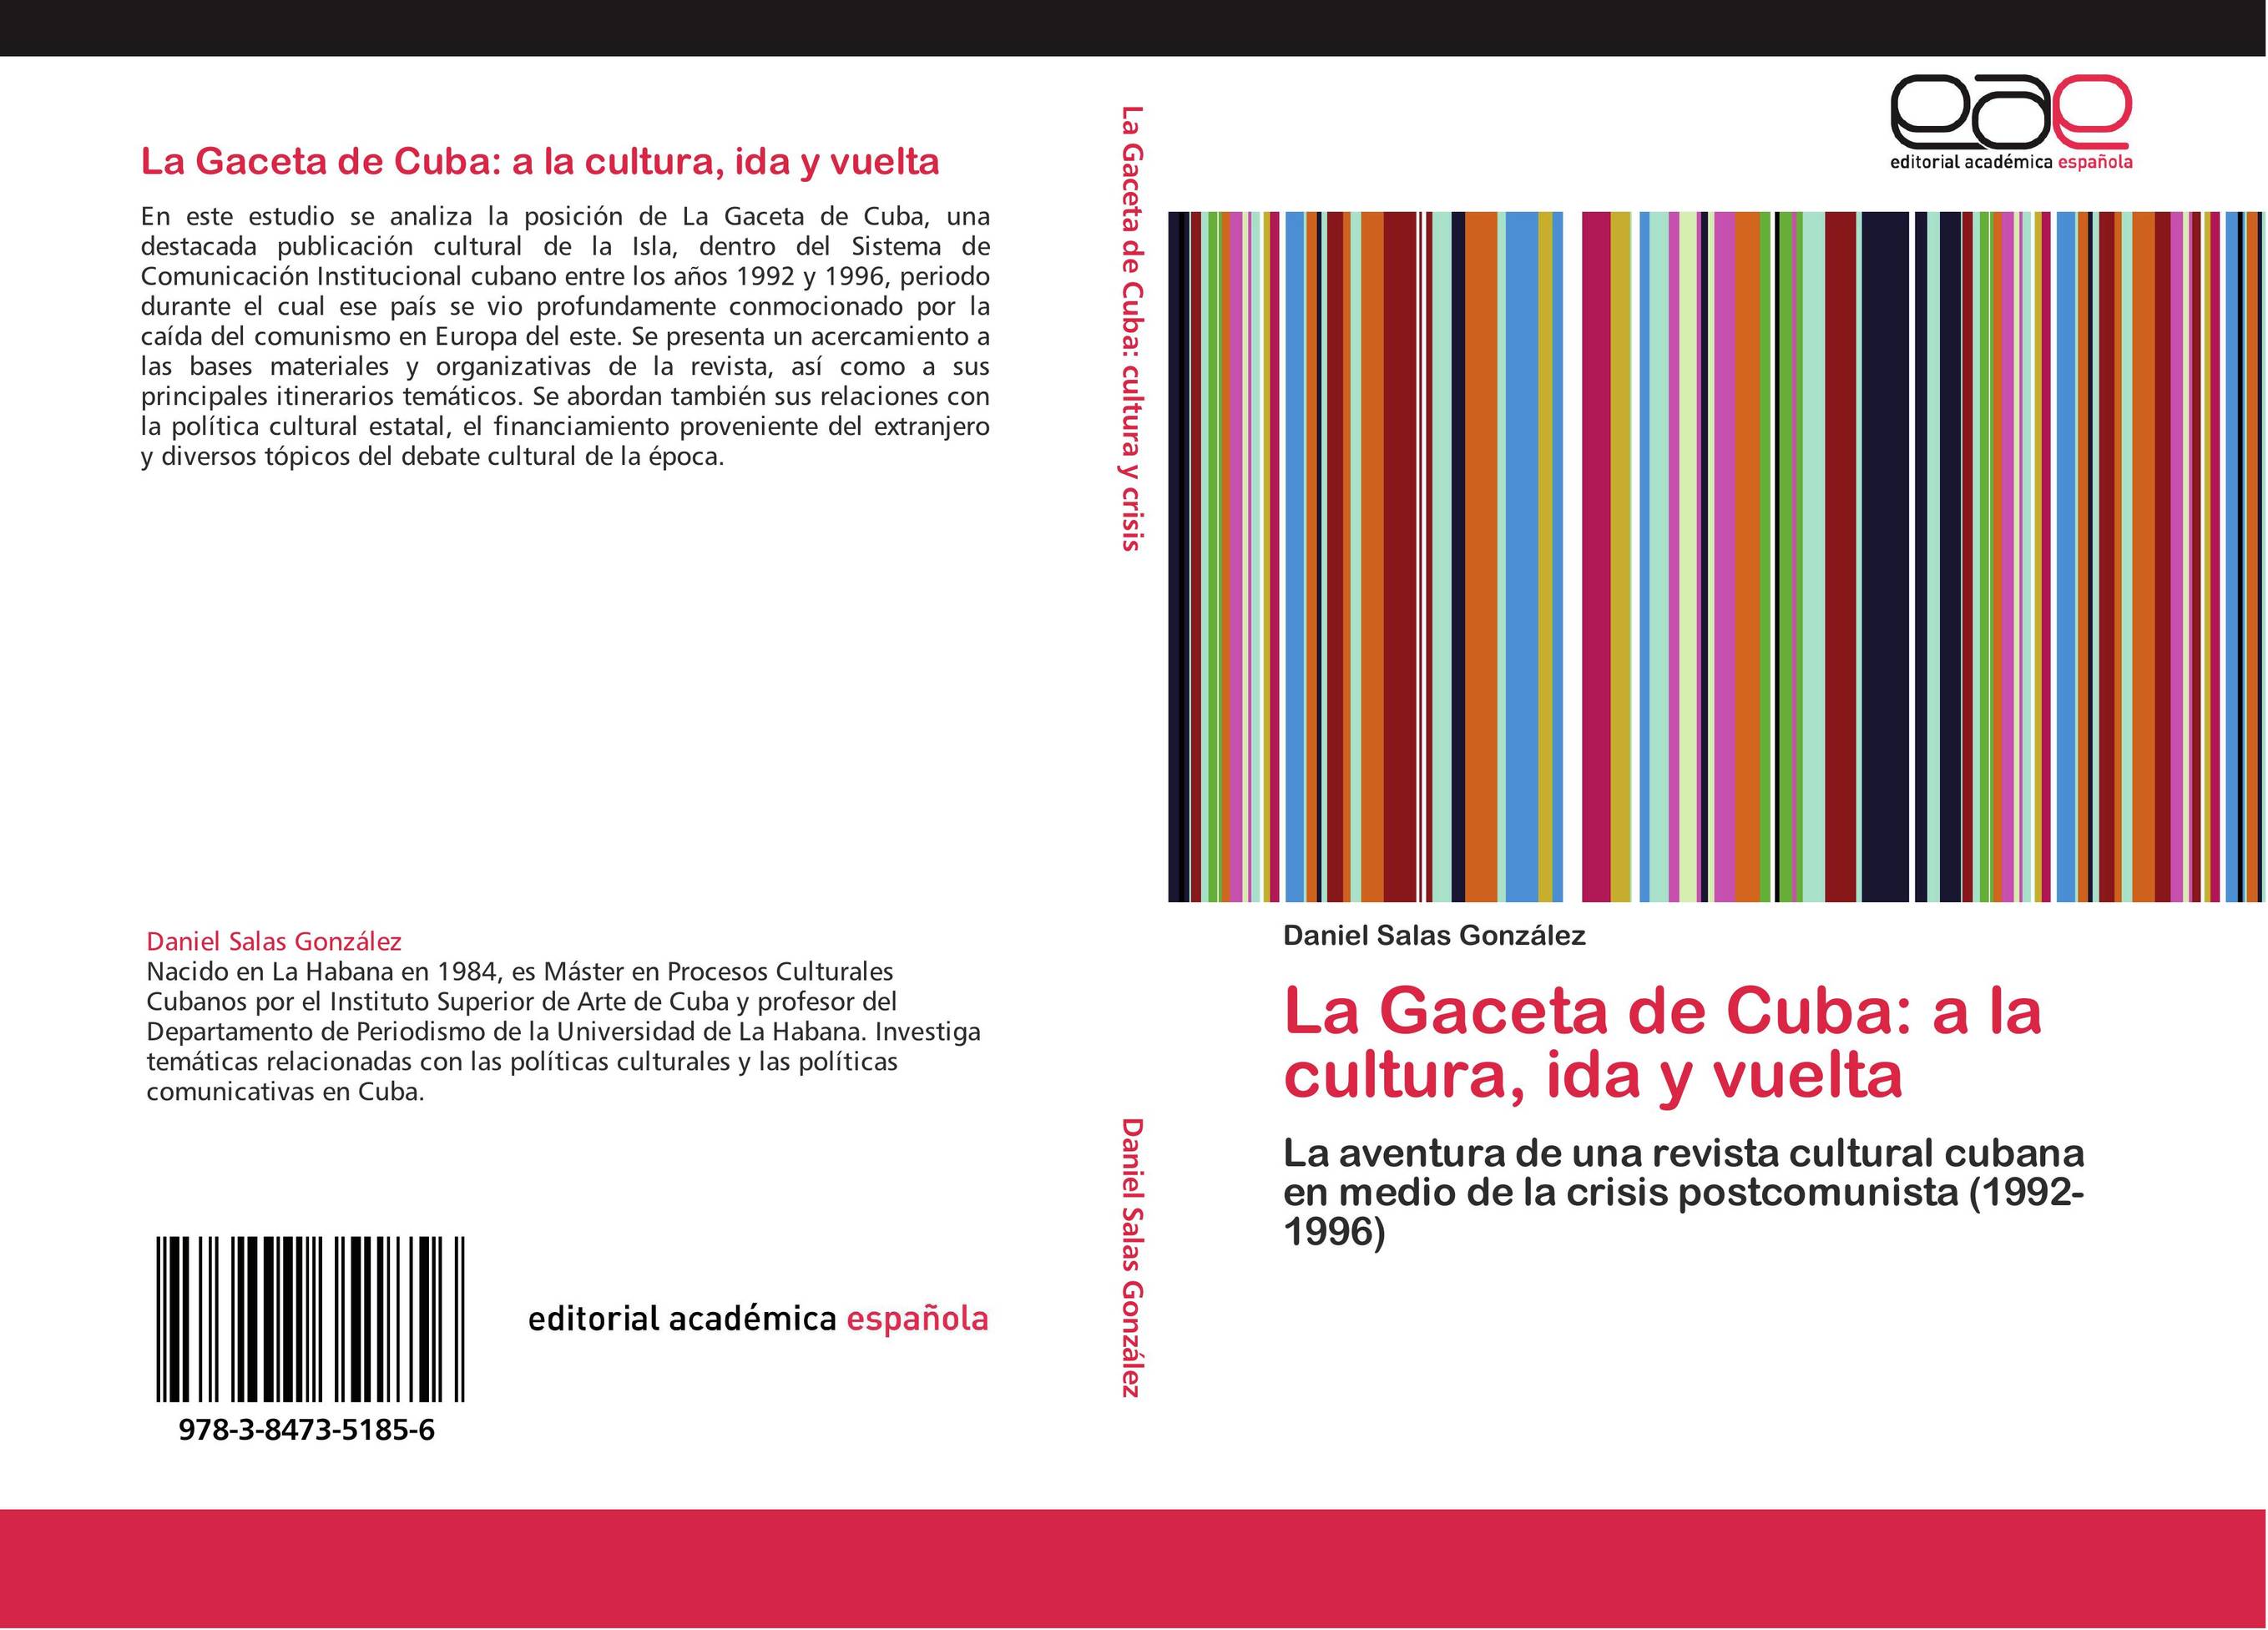 La Gaceta de Cuba: a la cultura, ida y vuelta